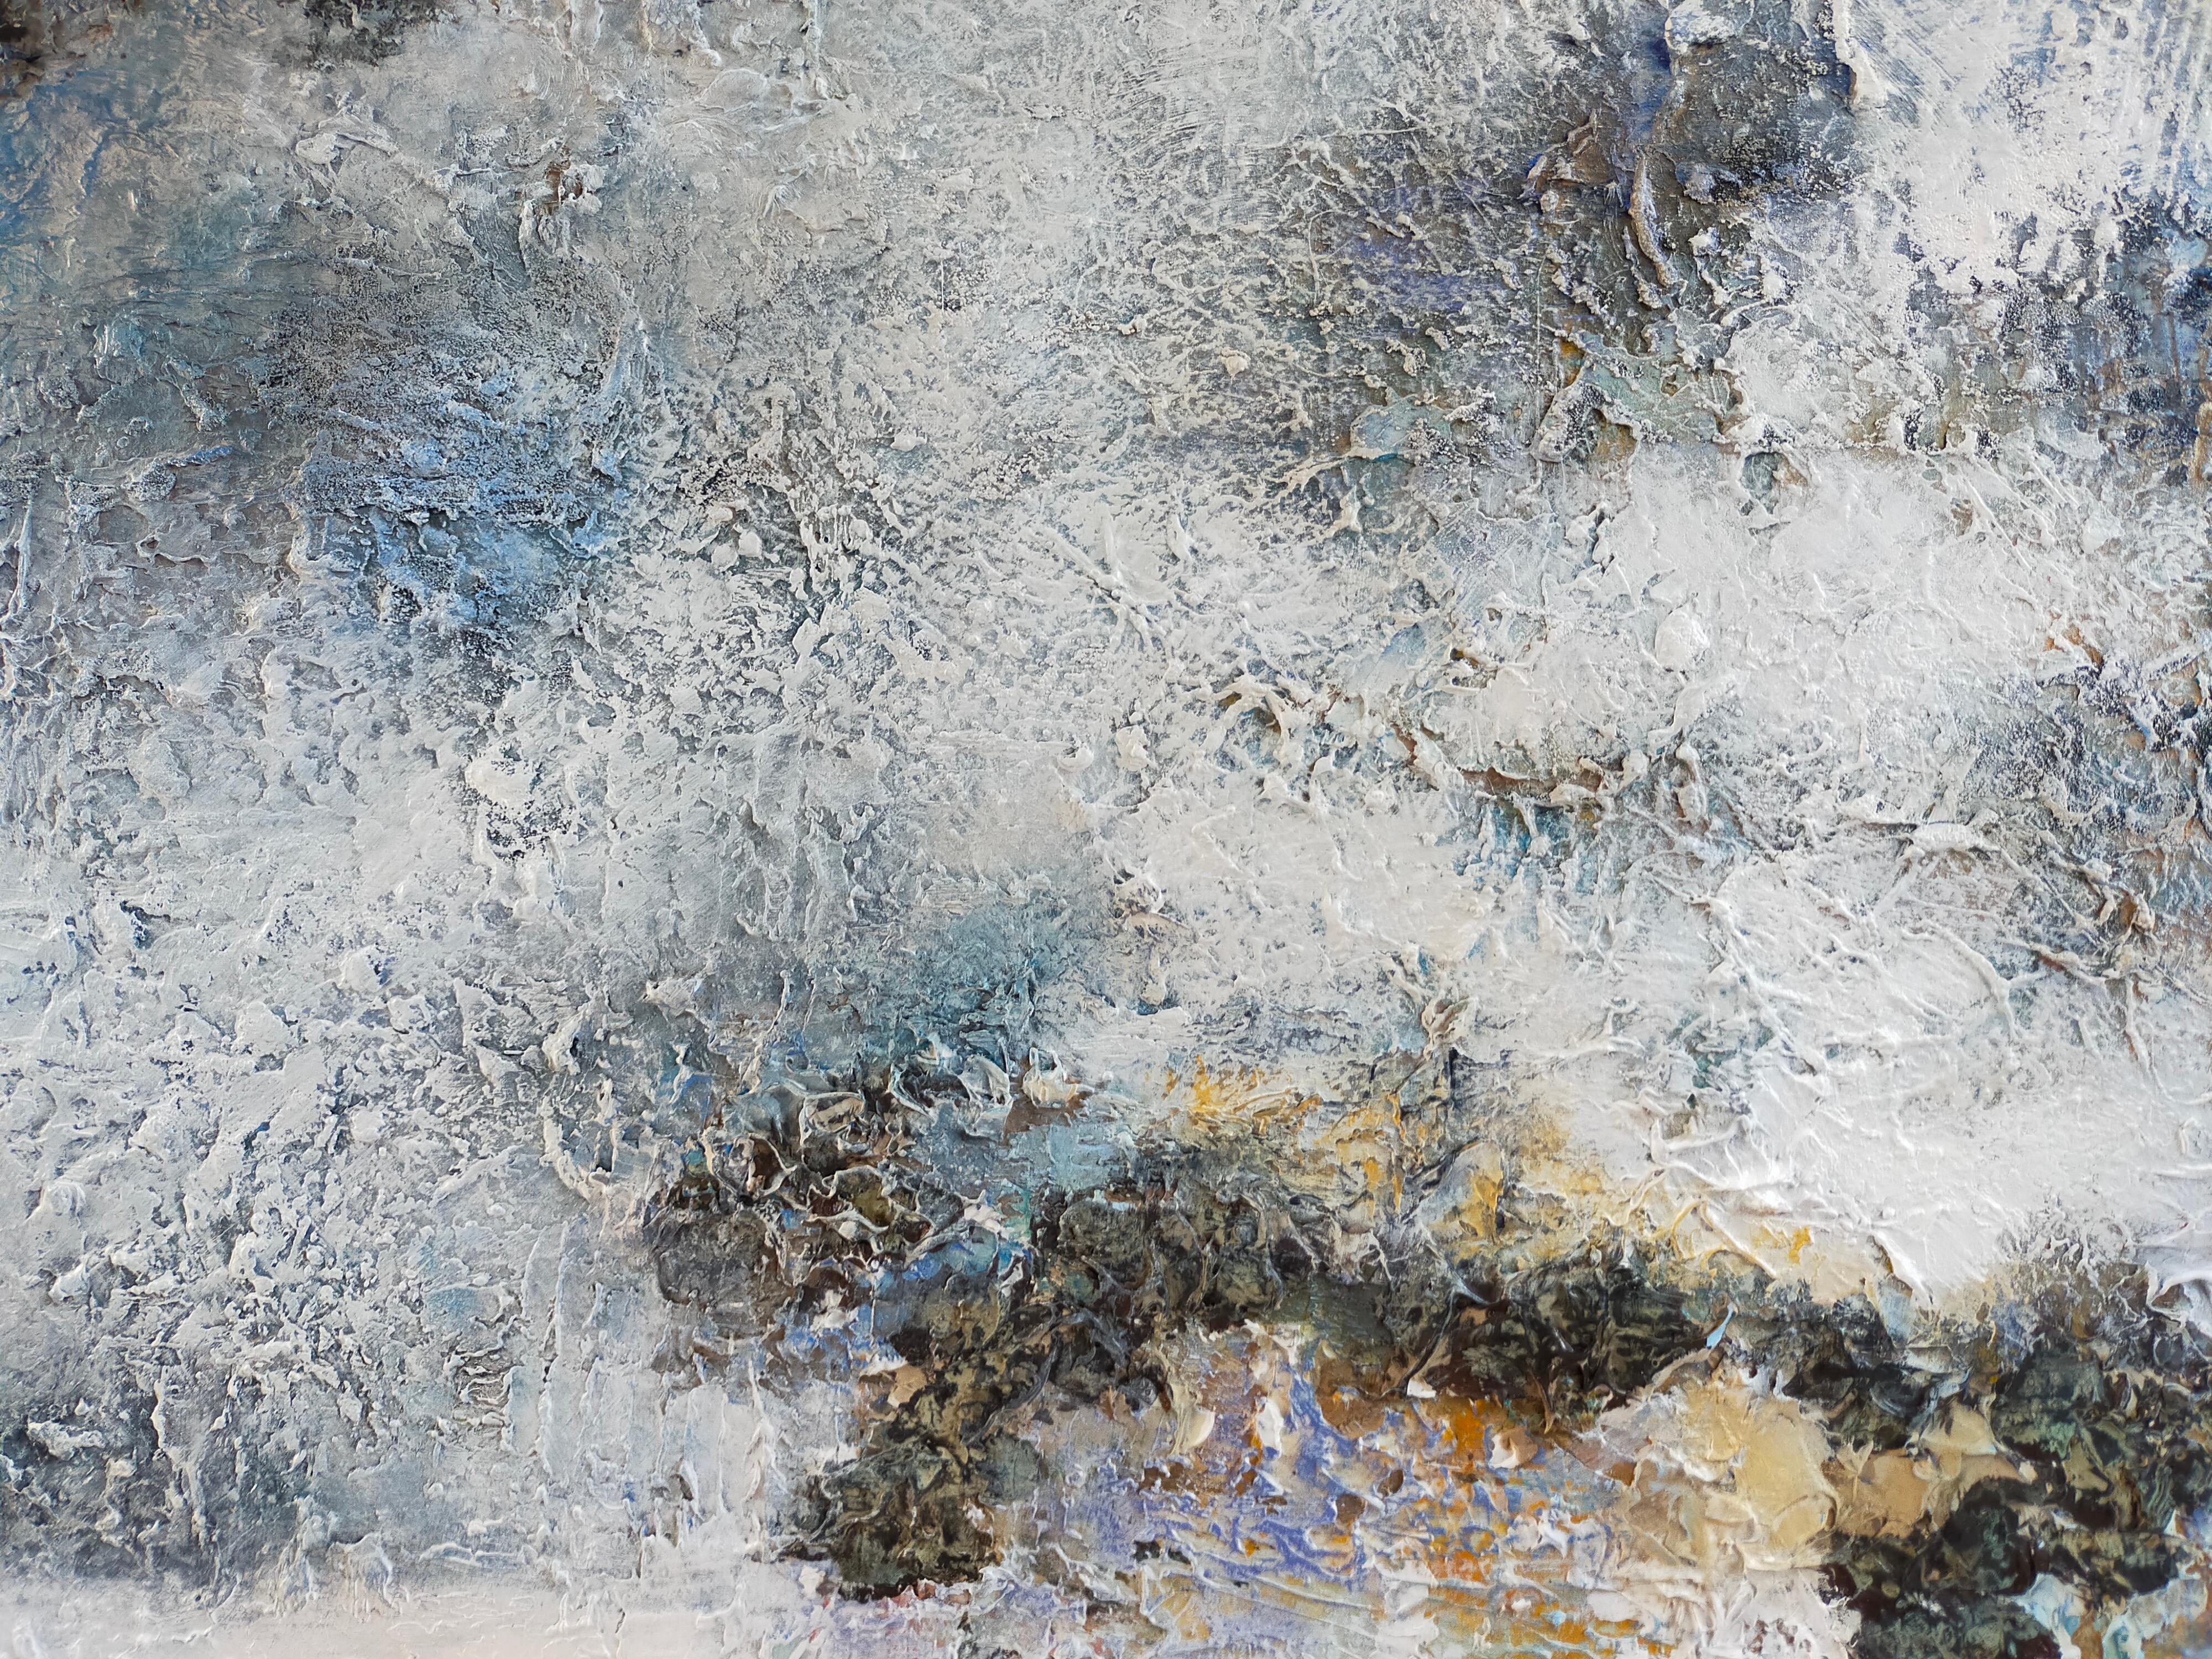 « The salty air of roscoff », oxydation acrylique abstraite sur toile de lin 100x80cm en vente 3